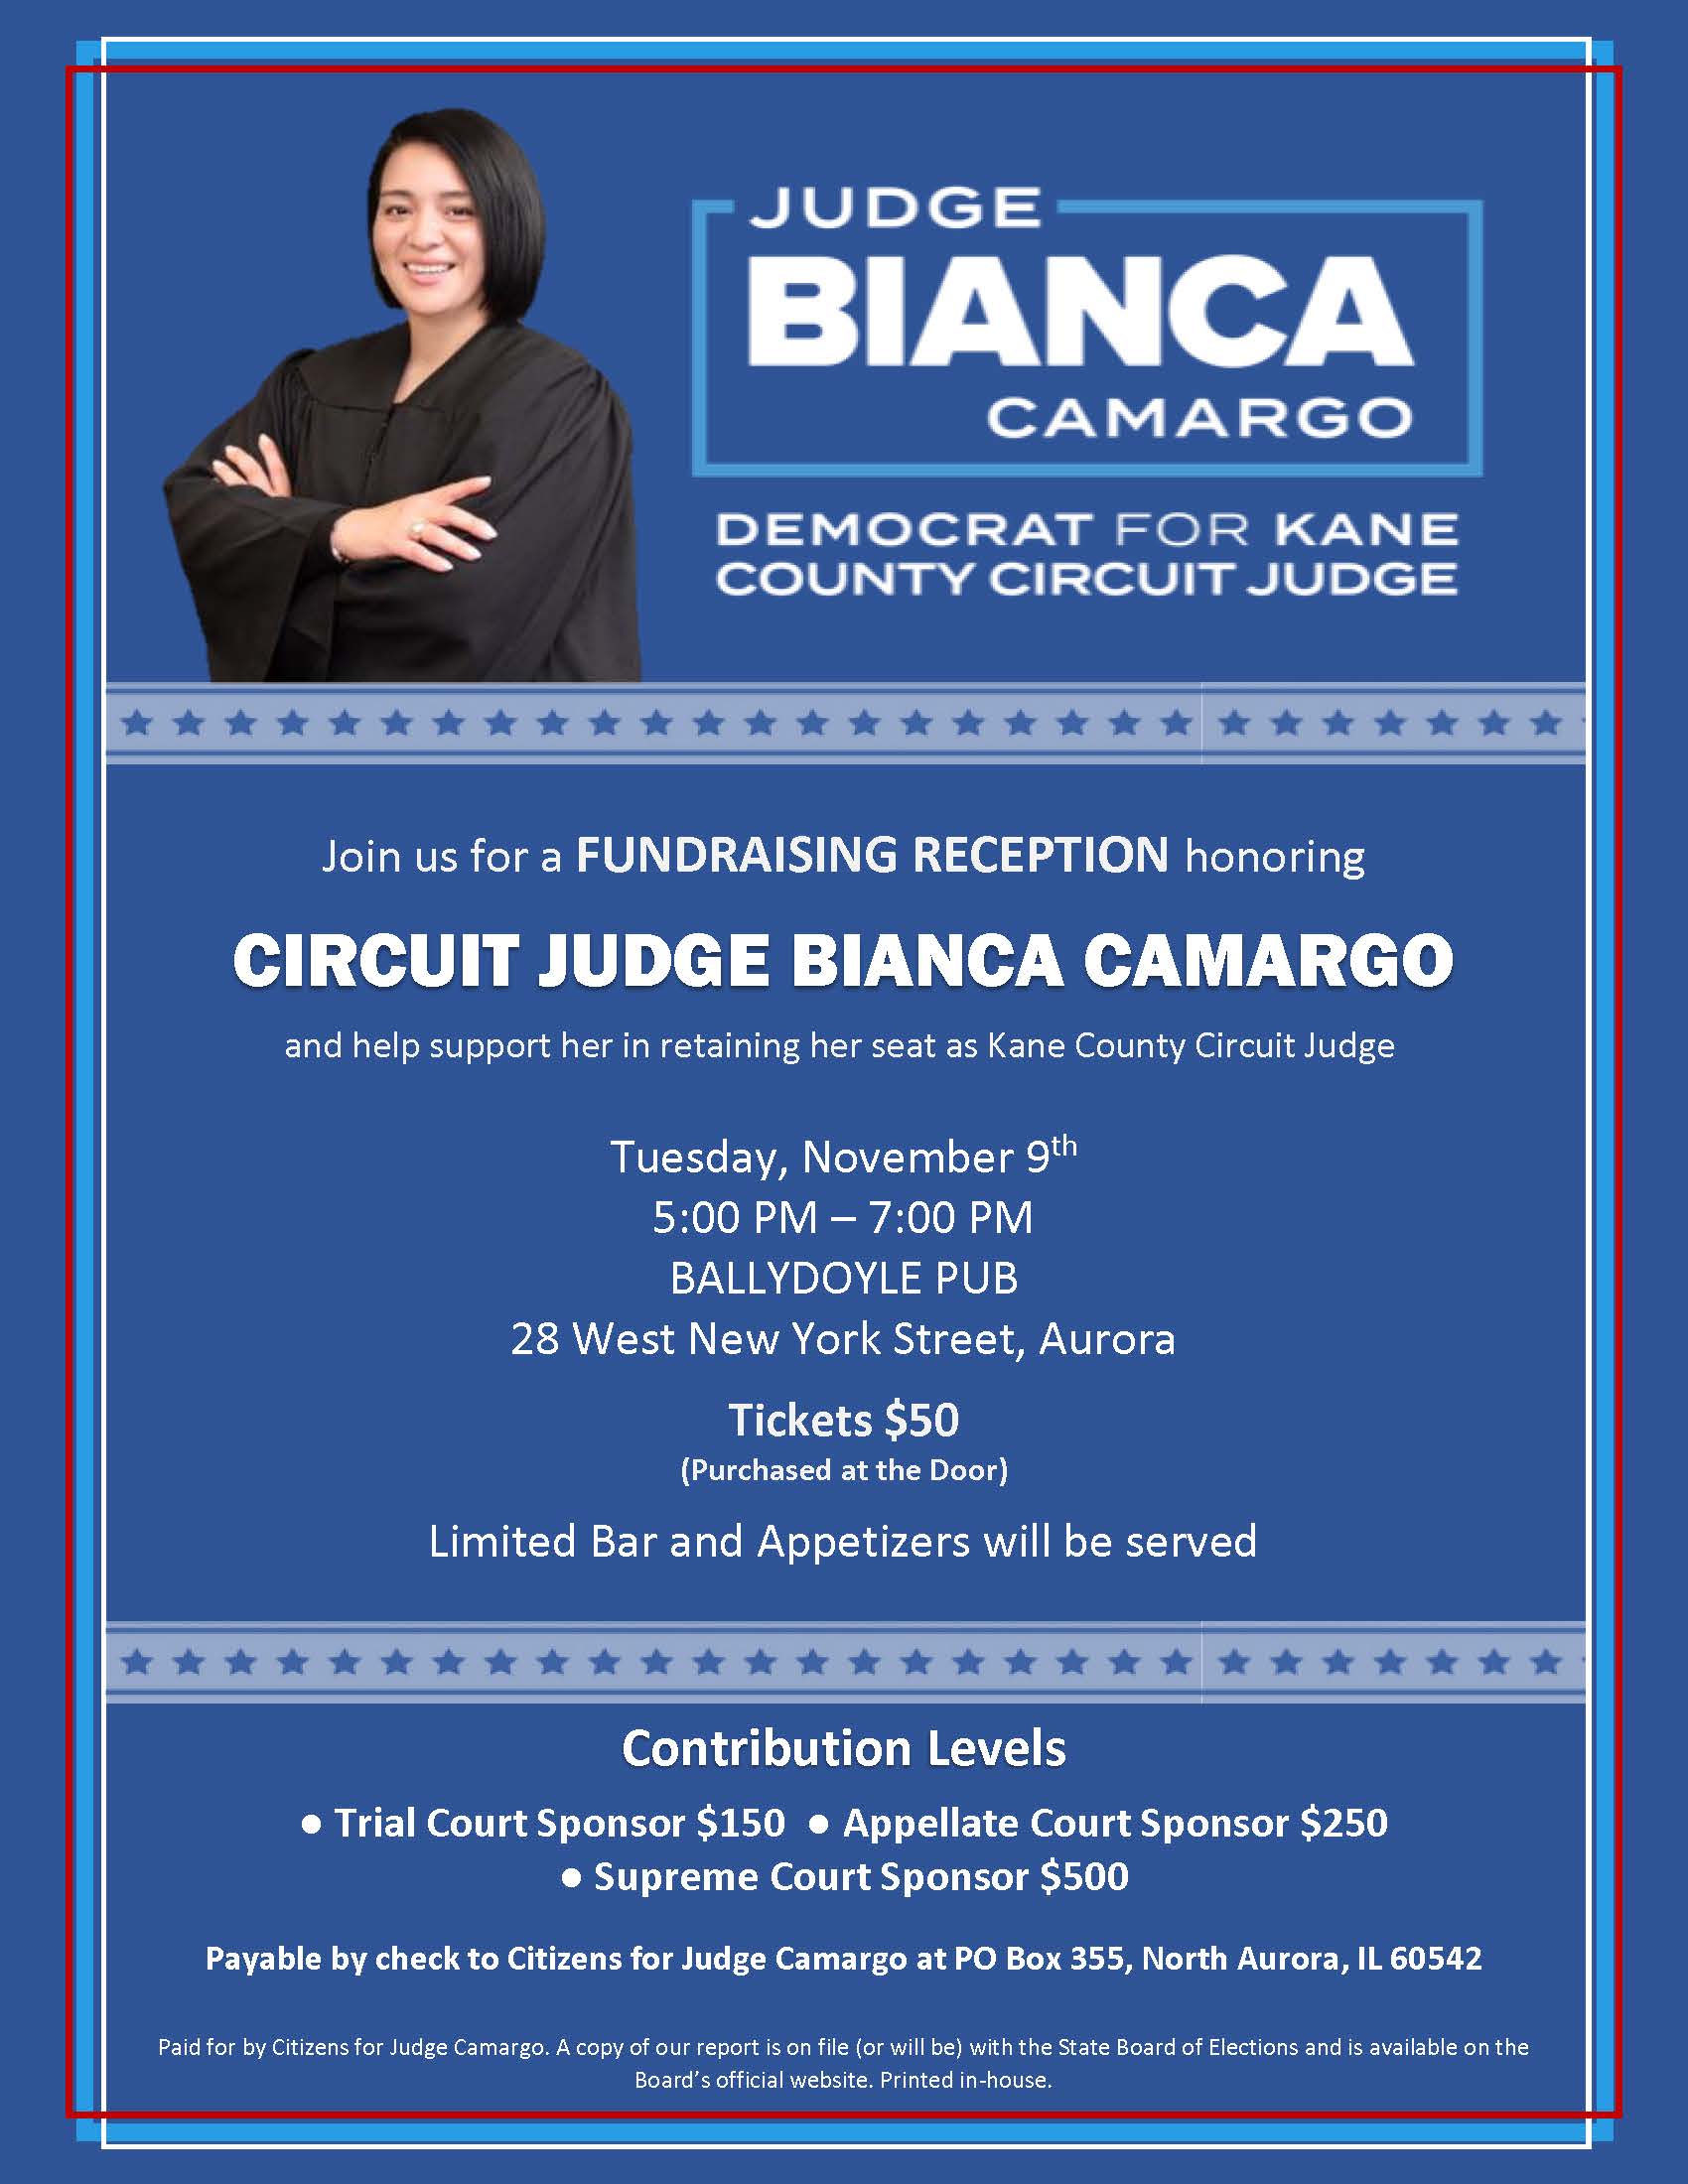 Fundraising Reception for Circuit Judge Bianca Camargo @ Ballydoyle Pub